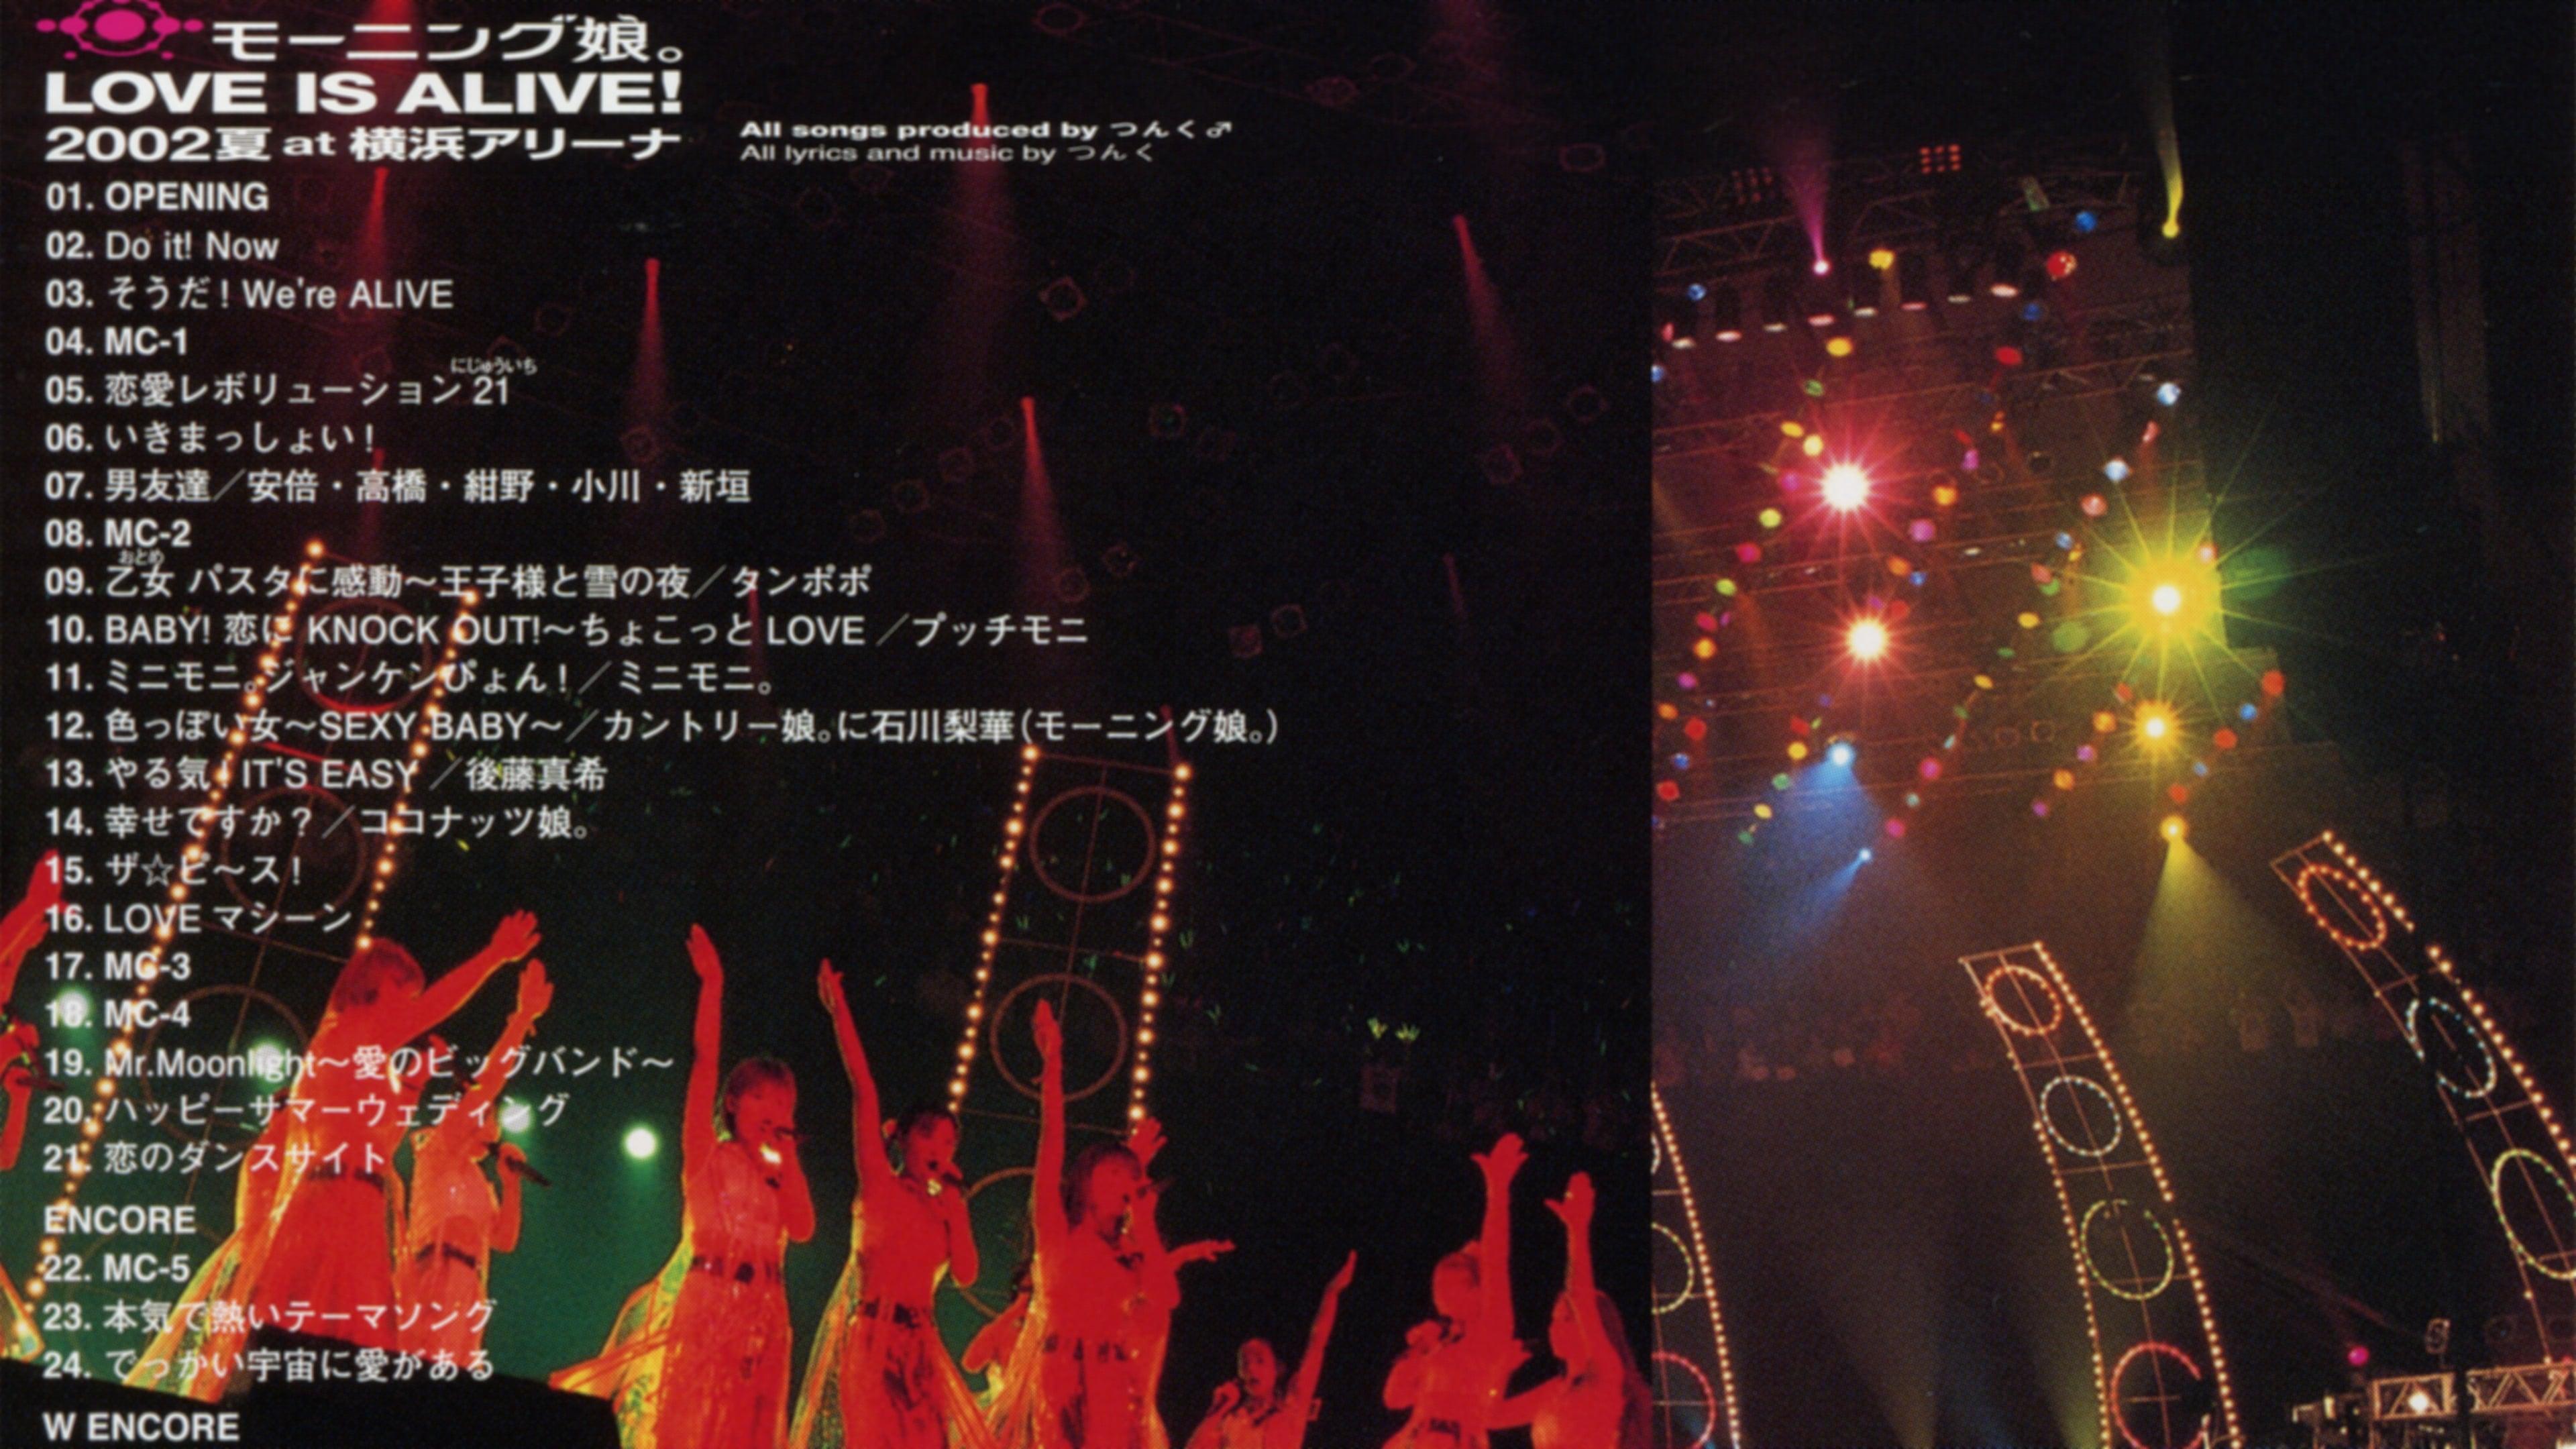 Morning Musume. 2002 Summer "LOVE IS ALIVE!" at Yokohama Arena backdrop